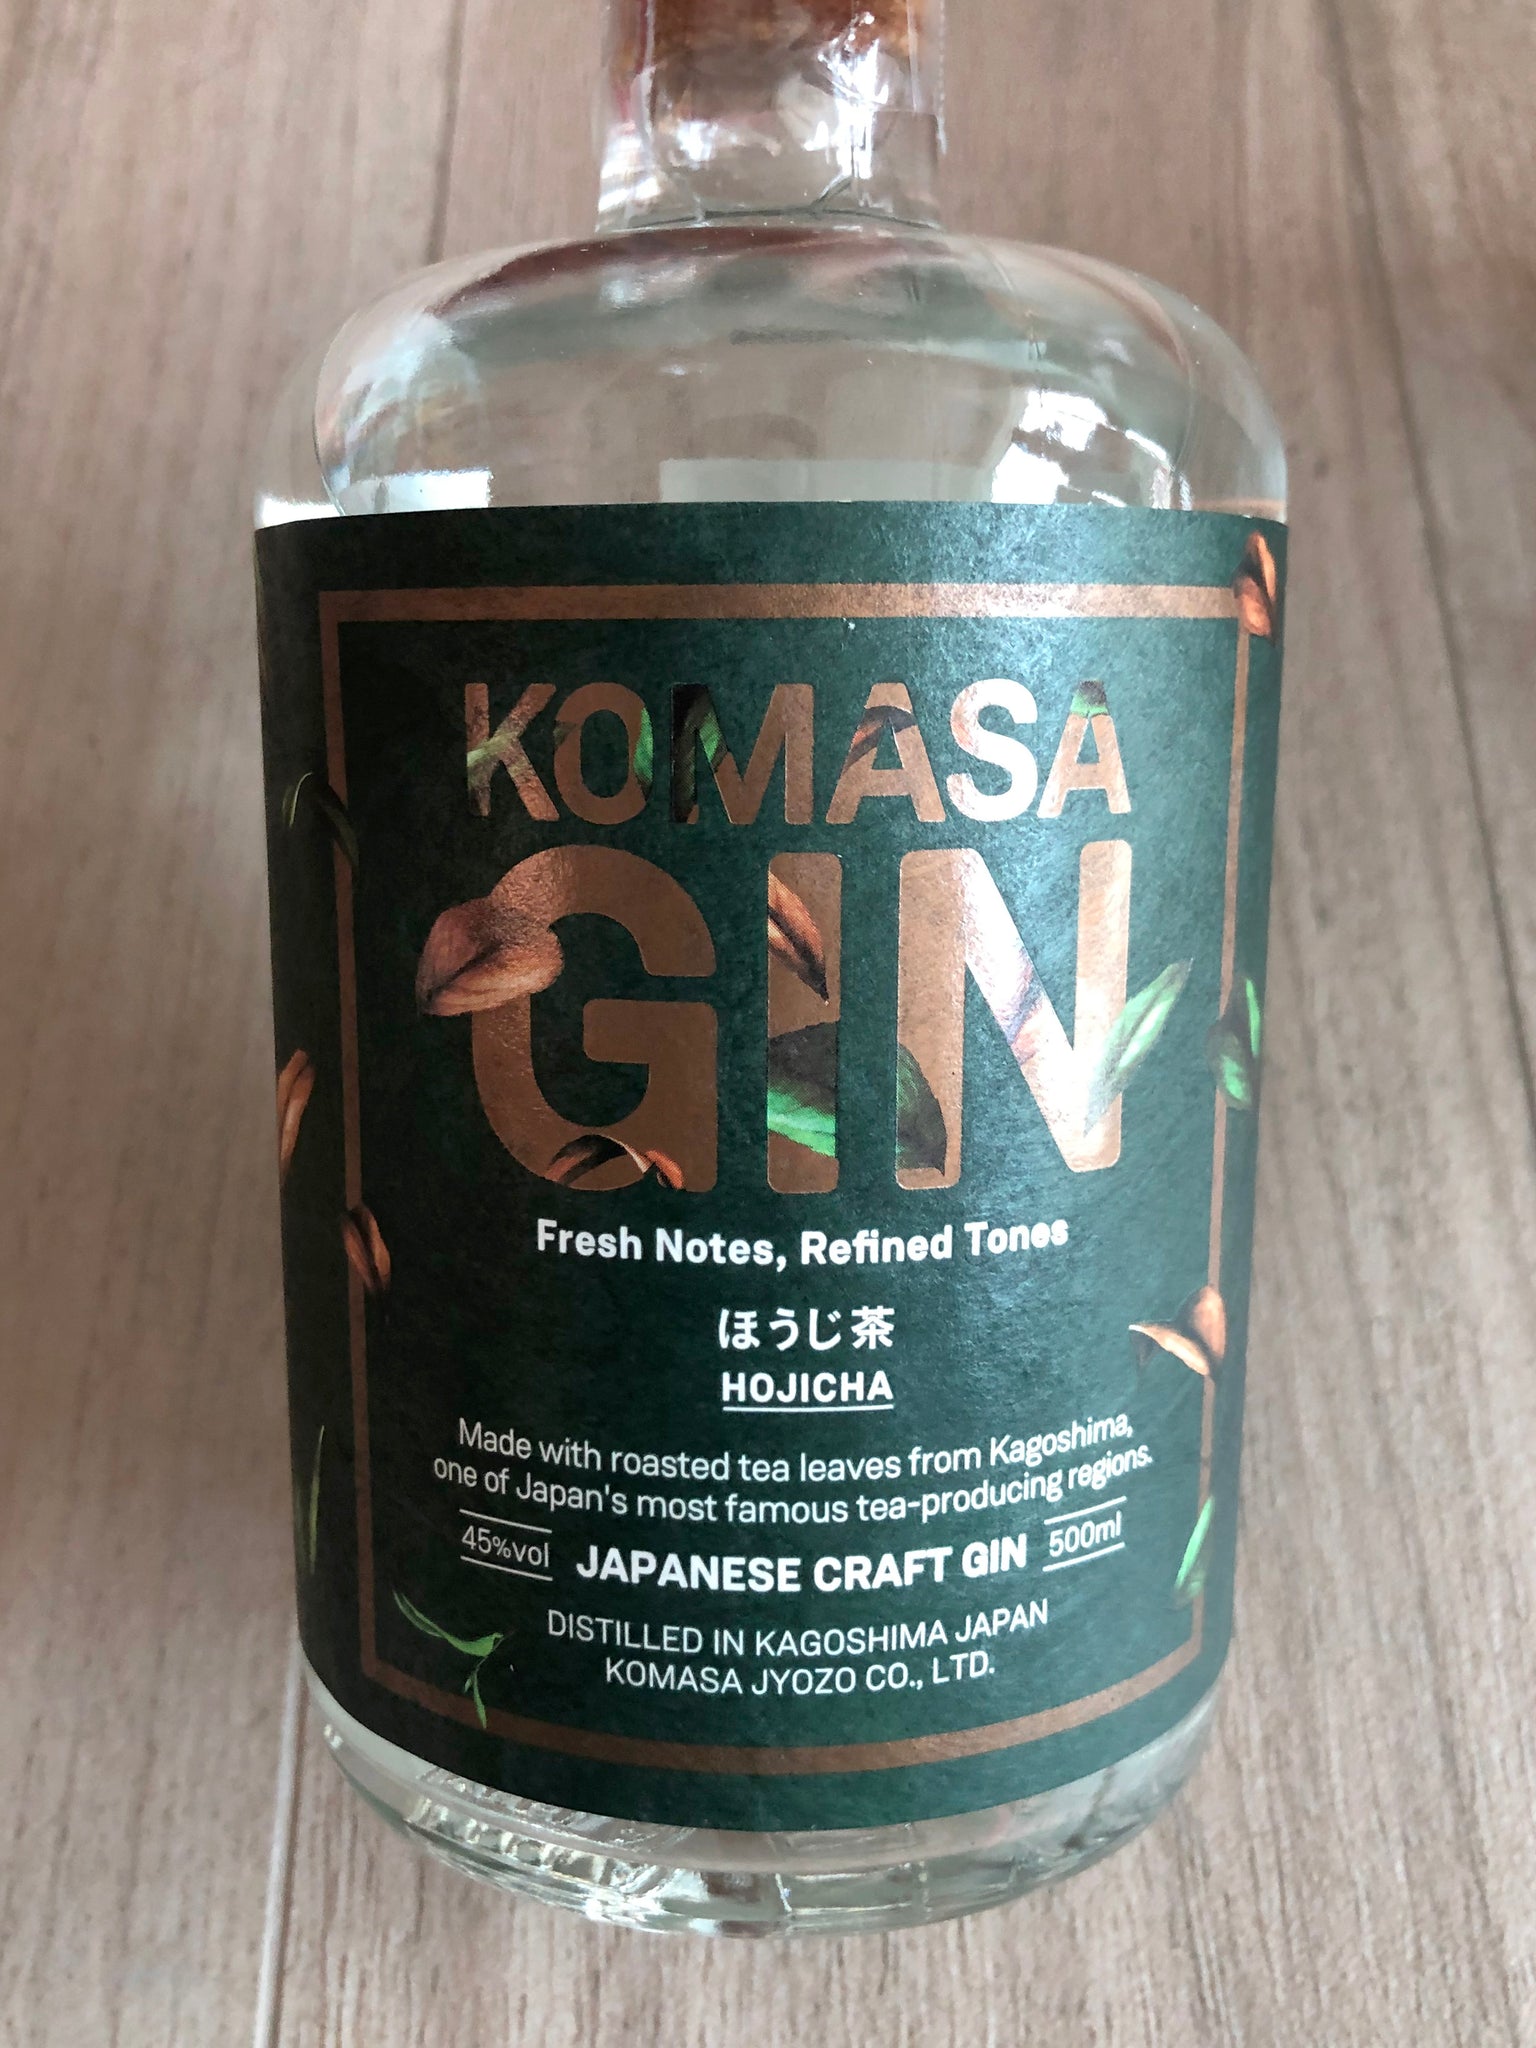 【Komasa】 Gin Hojicha 焙茶 (with box) 50cl